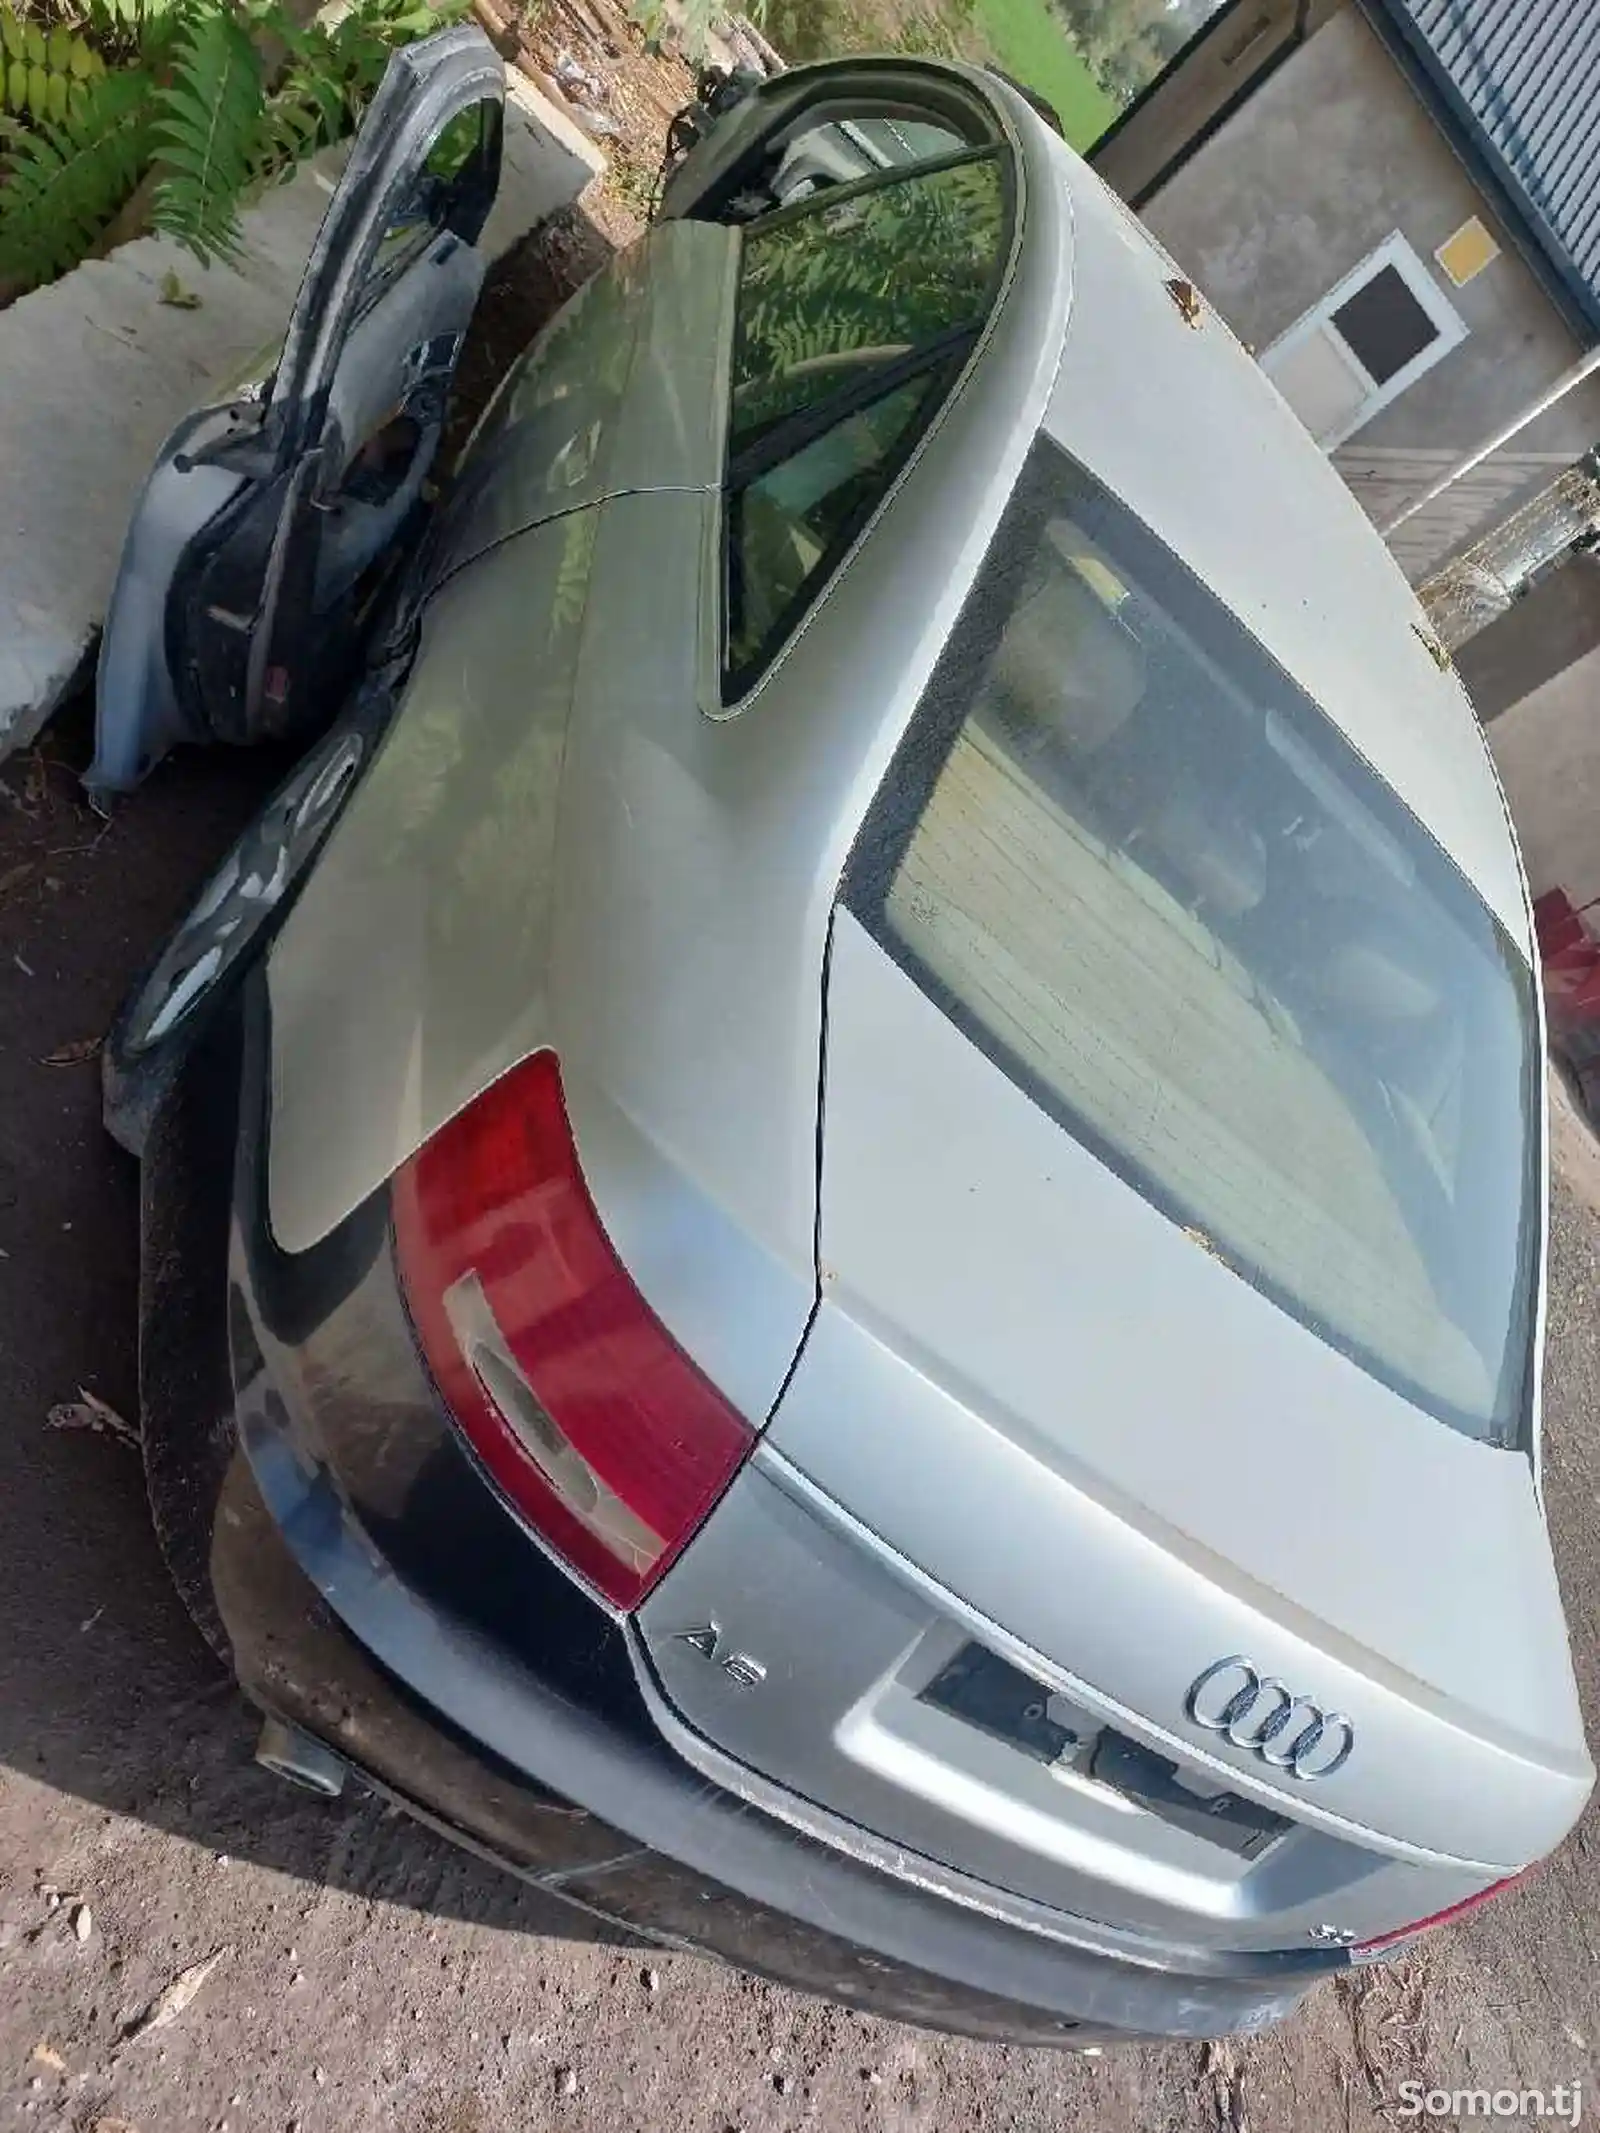 Audi A6, 2008-1